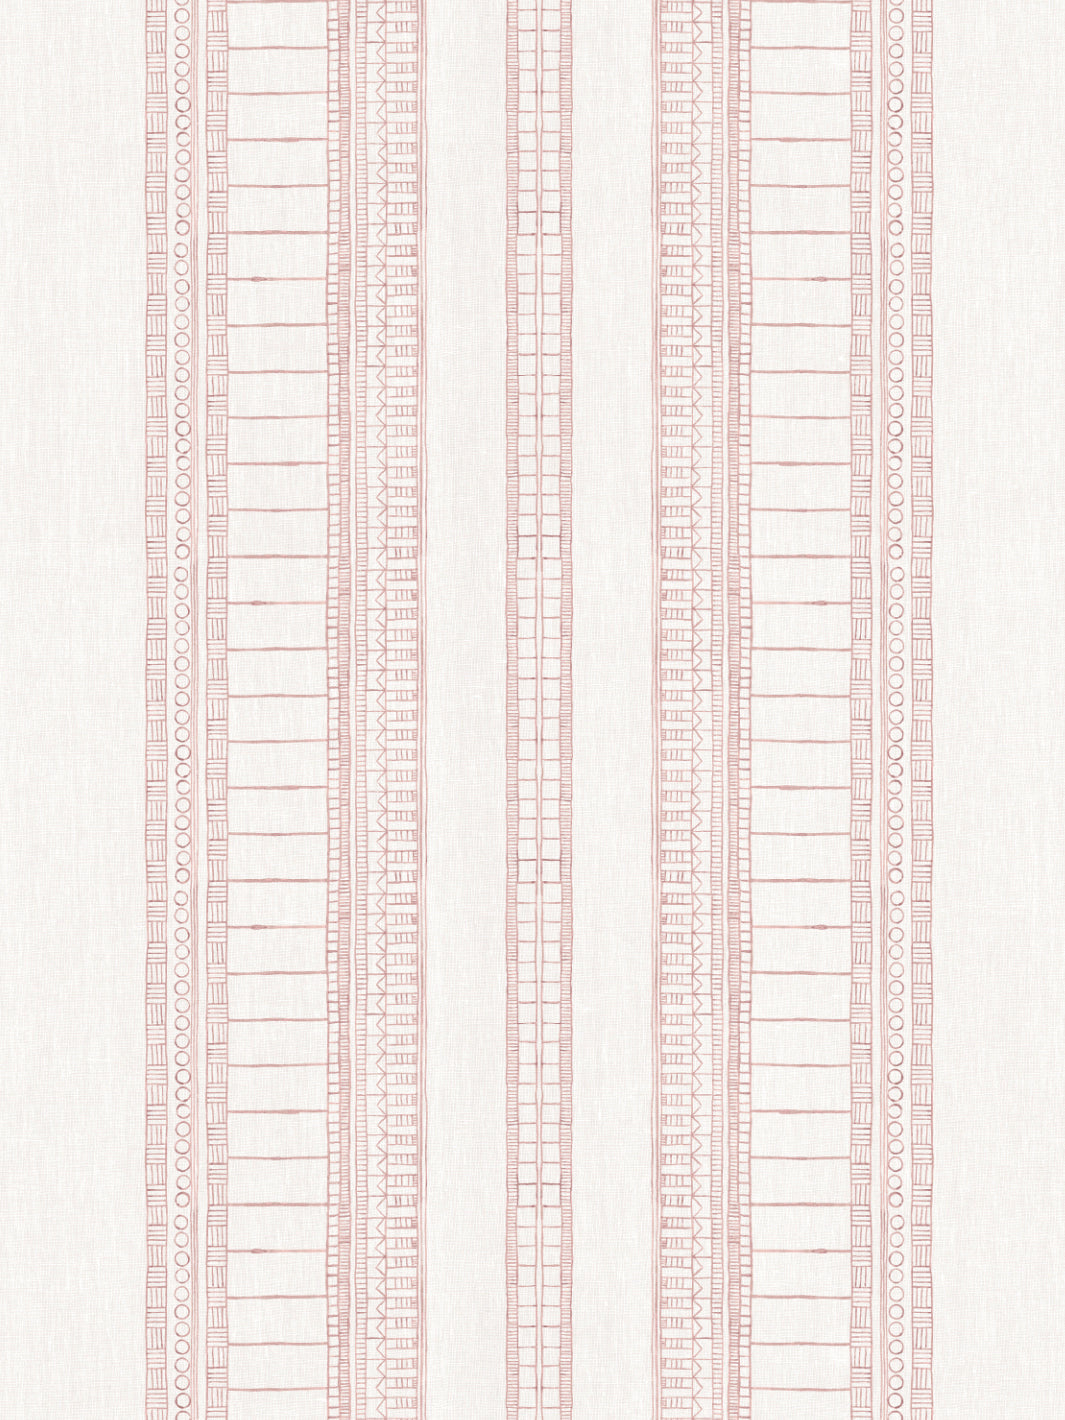 'Doodle Stripe' Wallpaper by Nathan Turner - Pink